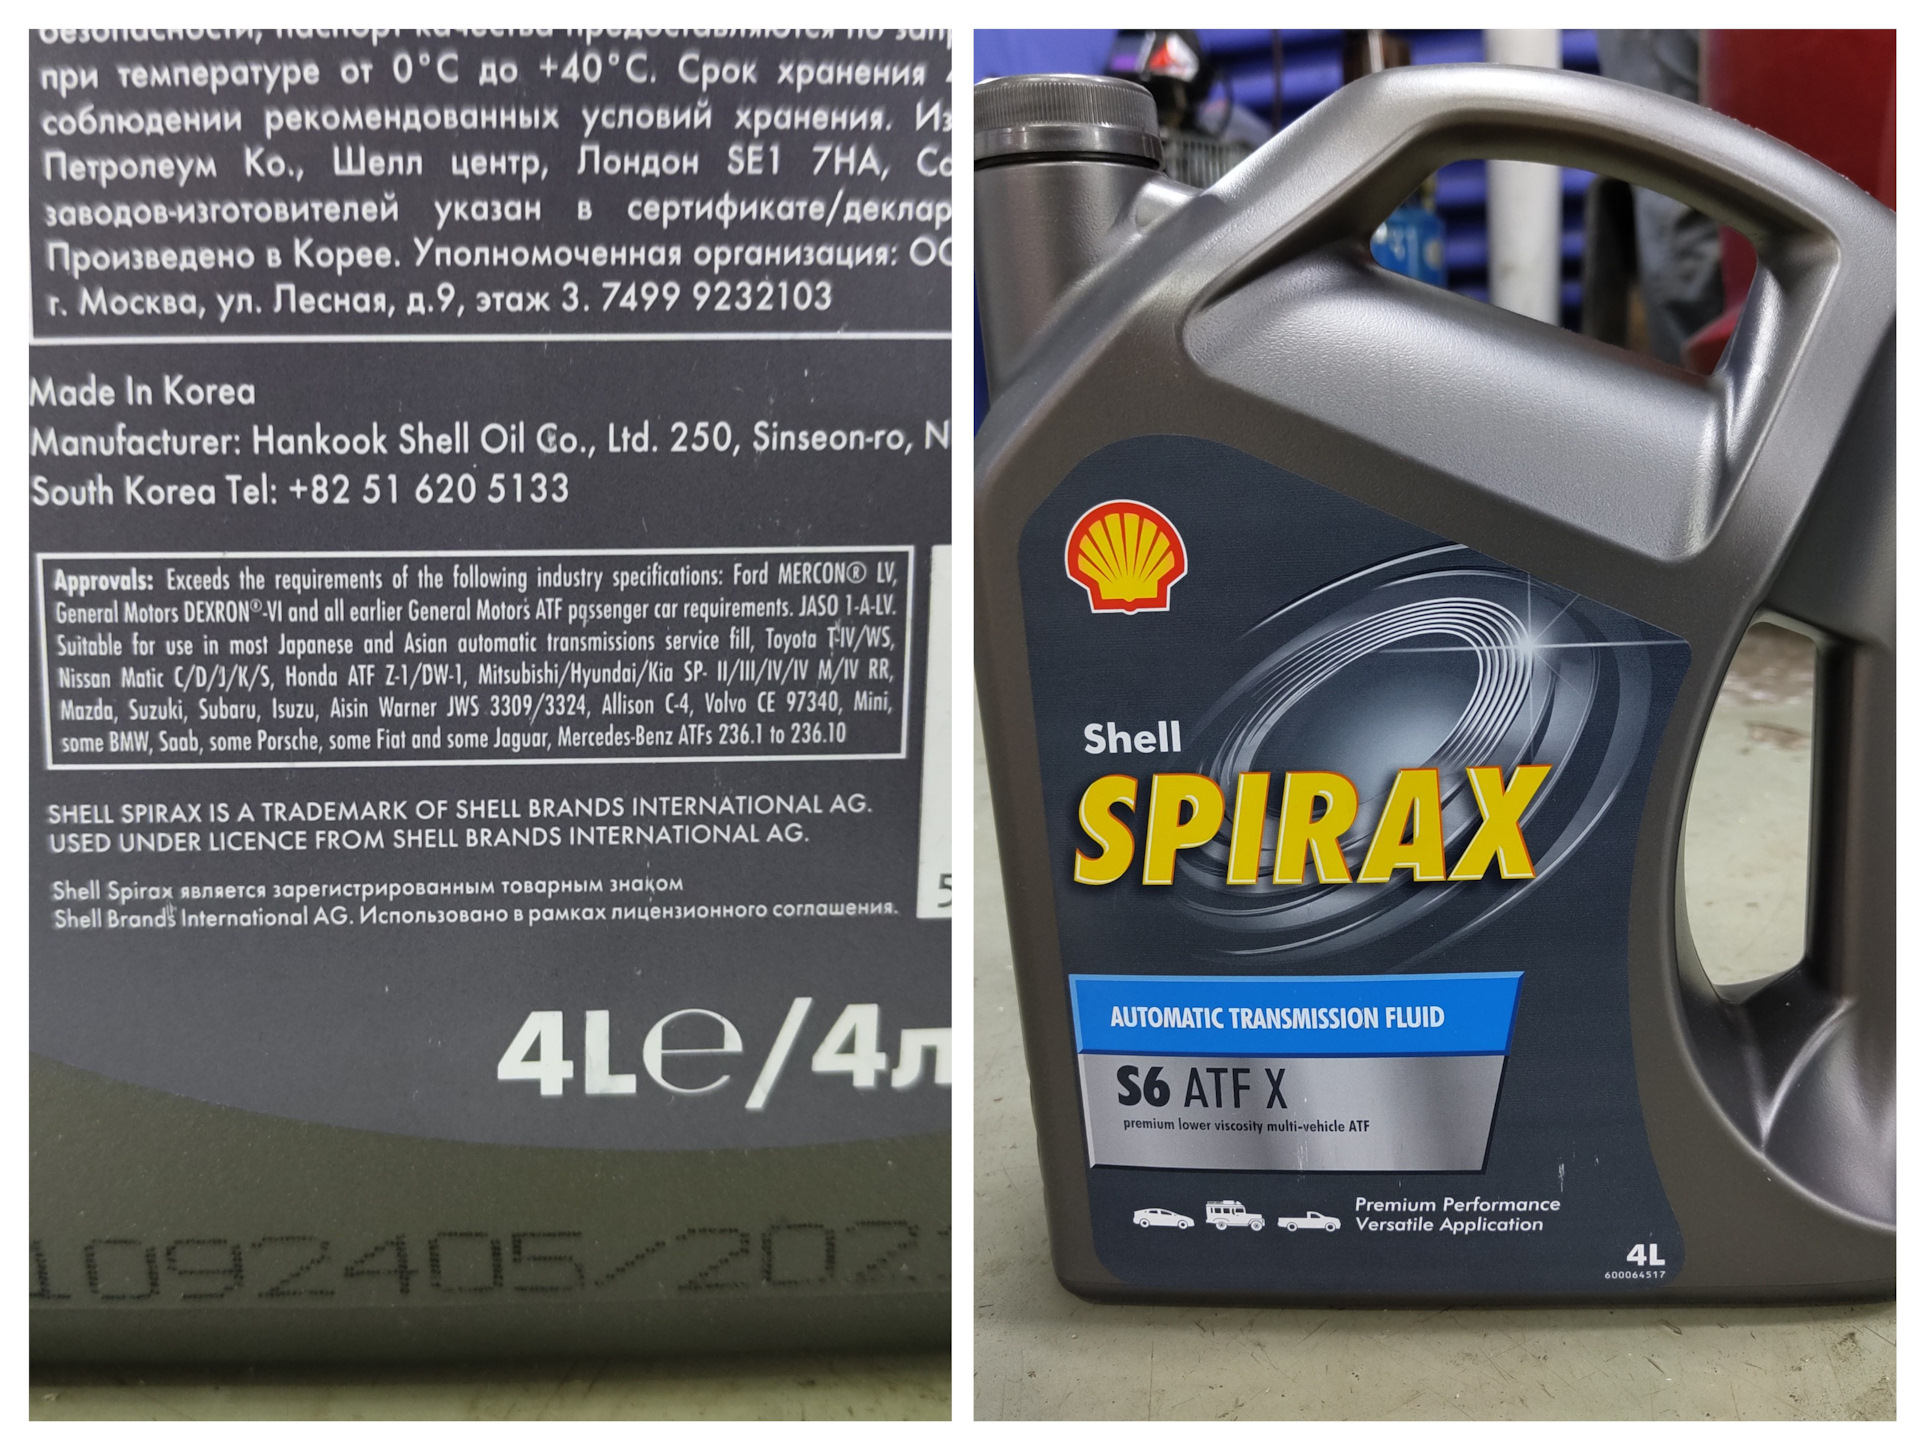 S6 atf x. Shell Spirax s6 ATF X. Трансмиссионное масло Shell Spirax s6 ATF X. Shell Spirax s6 ATF ZM. Shell Spirax s6 ATF X допуски.